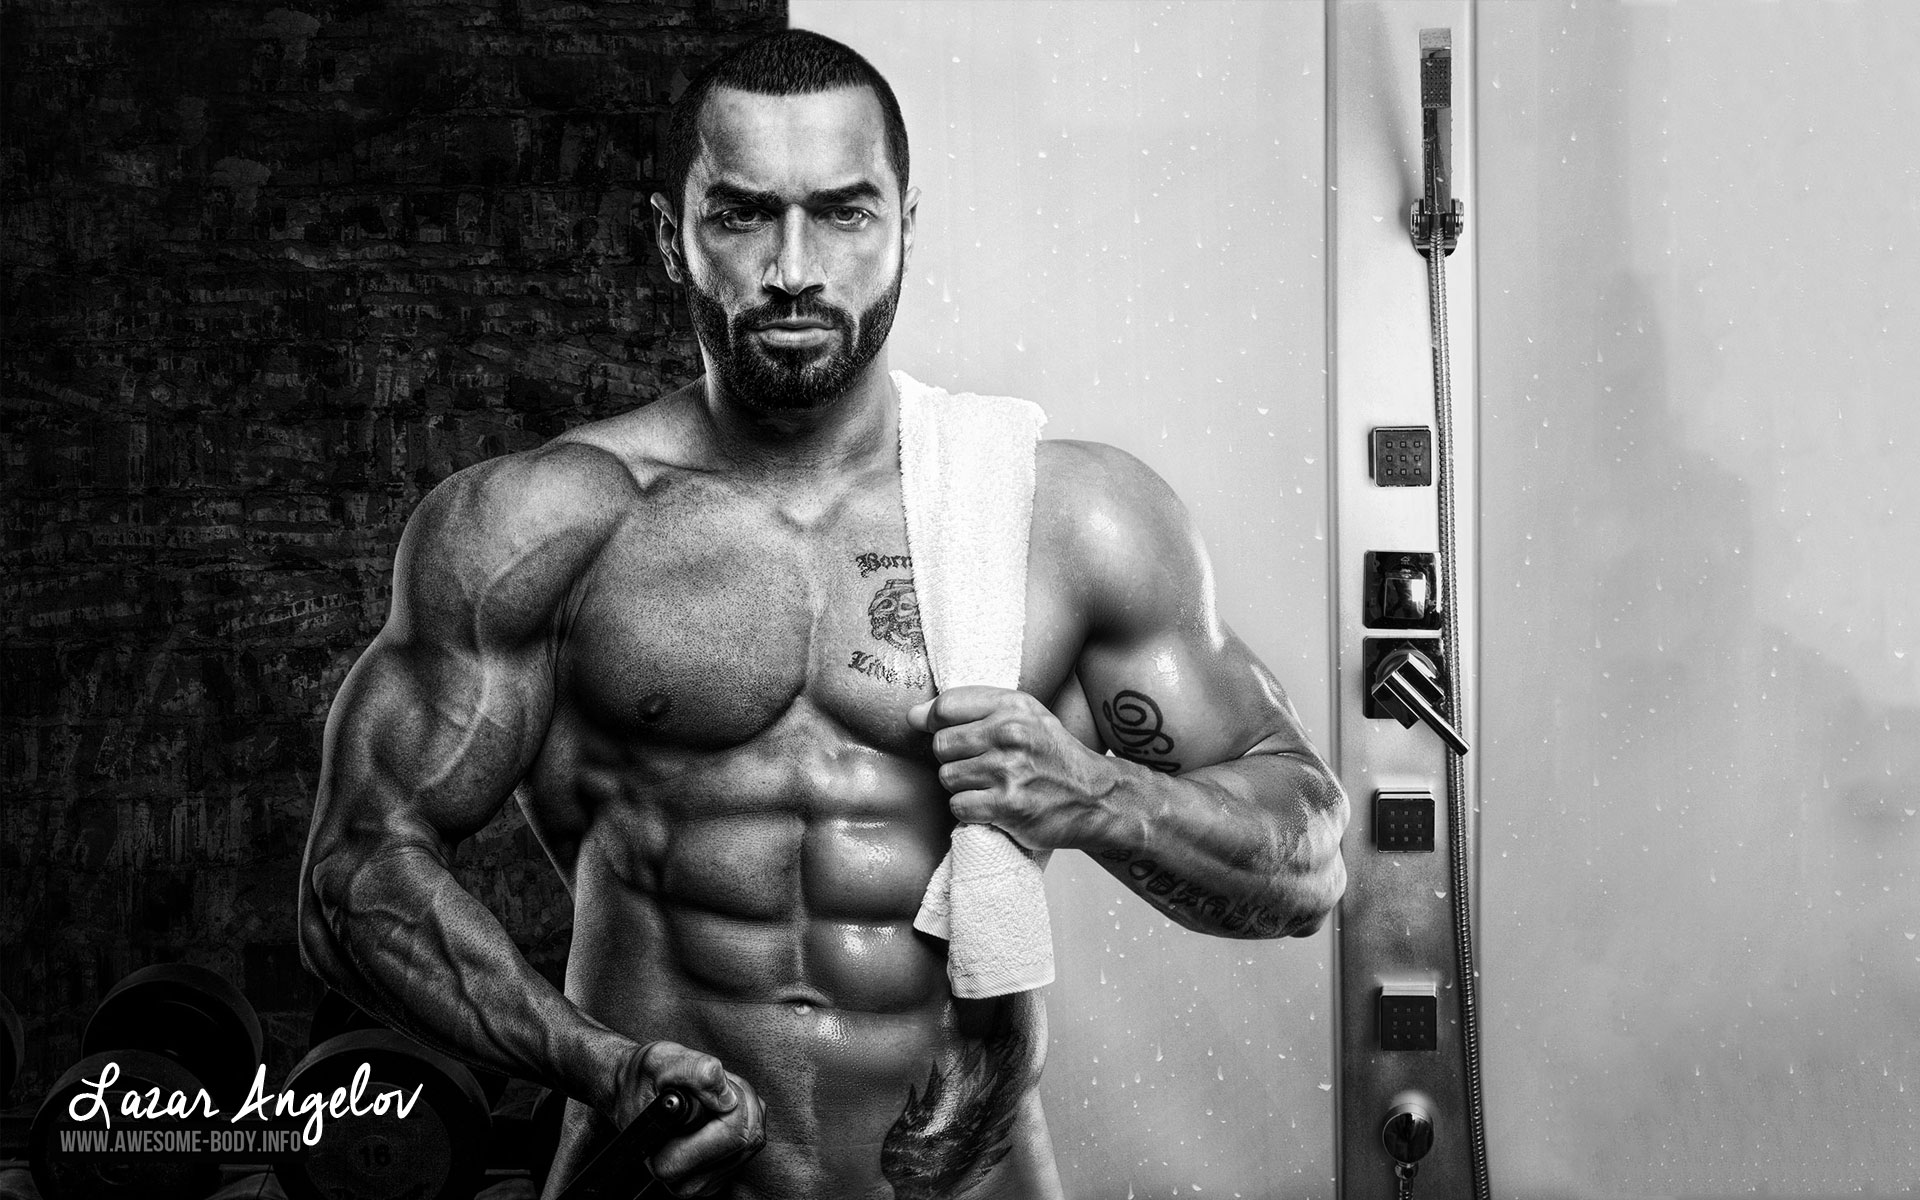 Lazar Angelov Bodybuilding Wallpaper Awesome Body